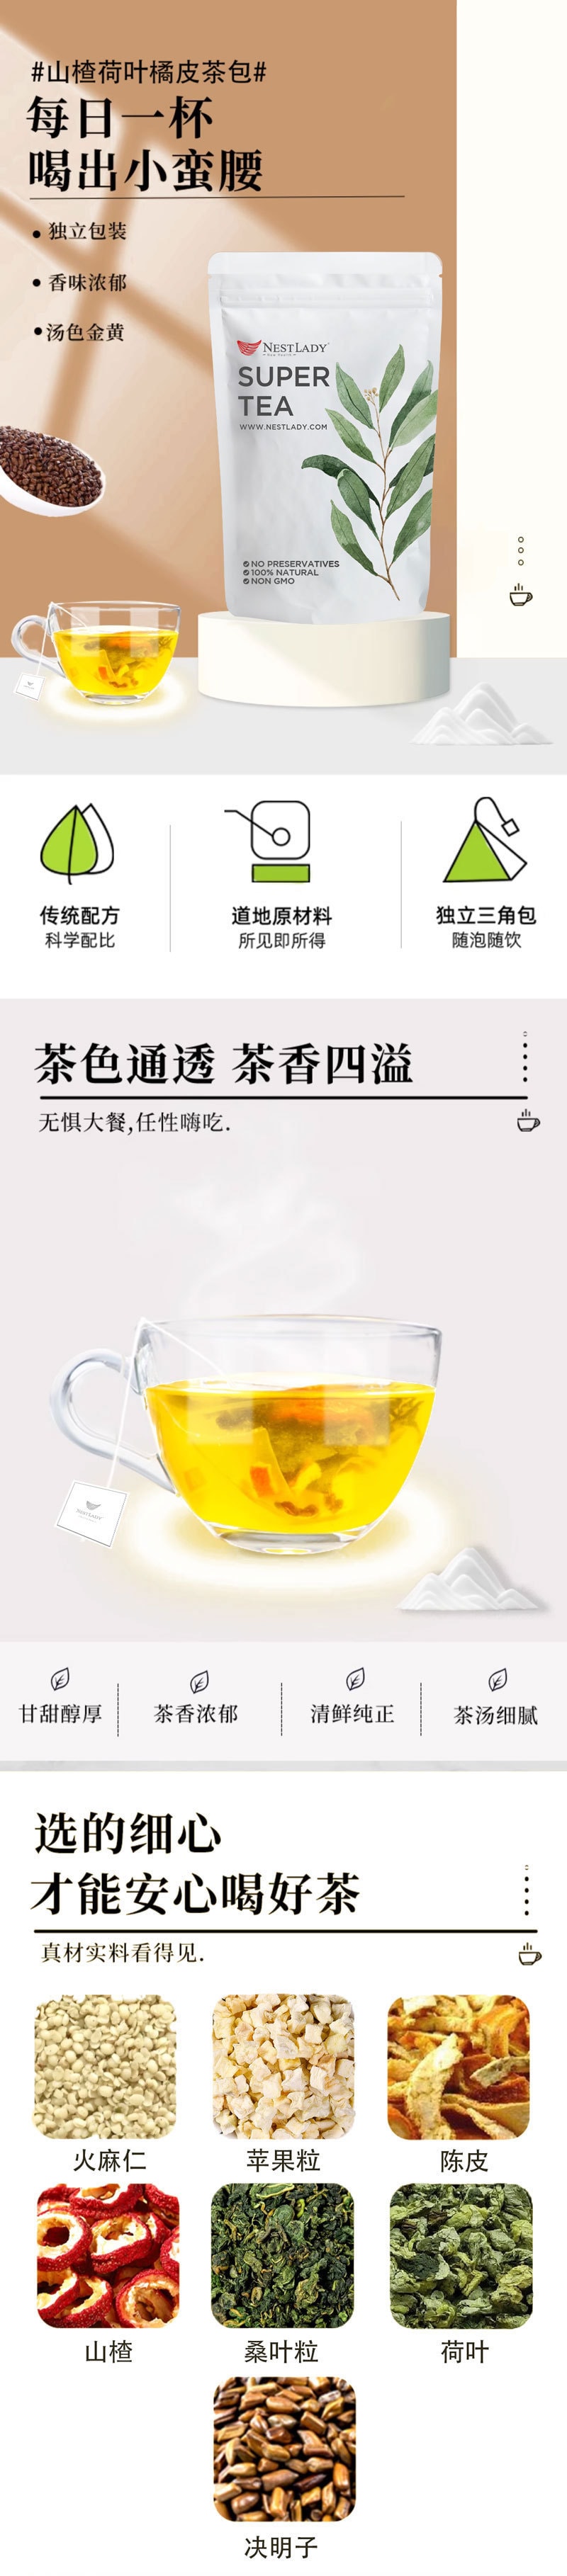 NestLady 山楂荷叶橘皮茶包 运动促代谢减肥茶20pcs